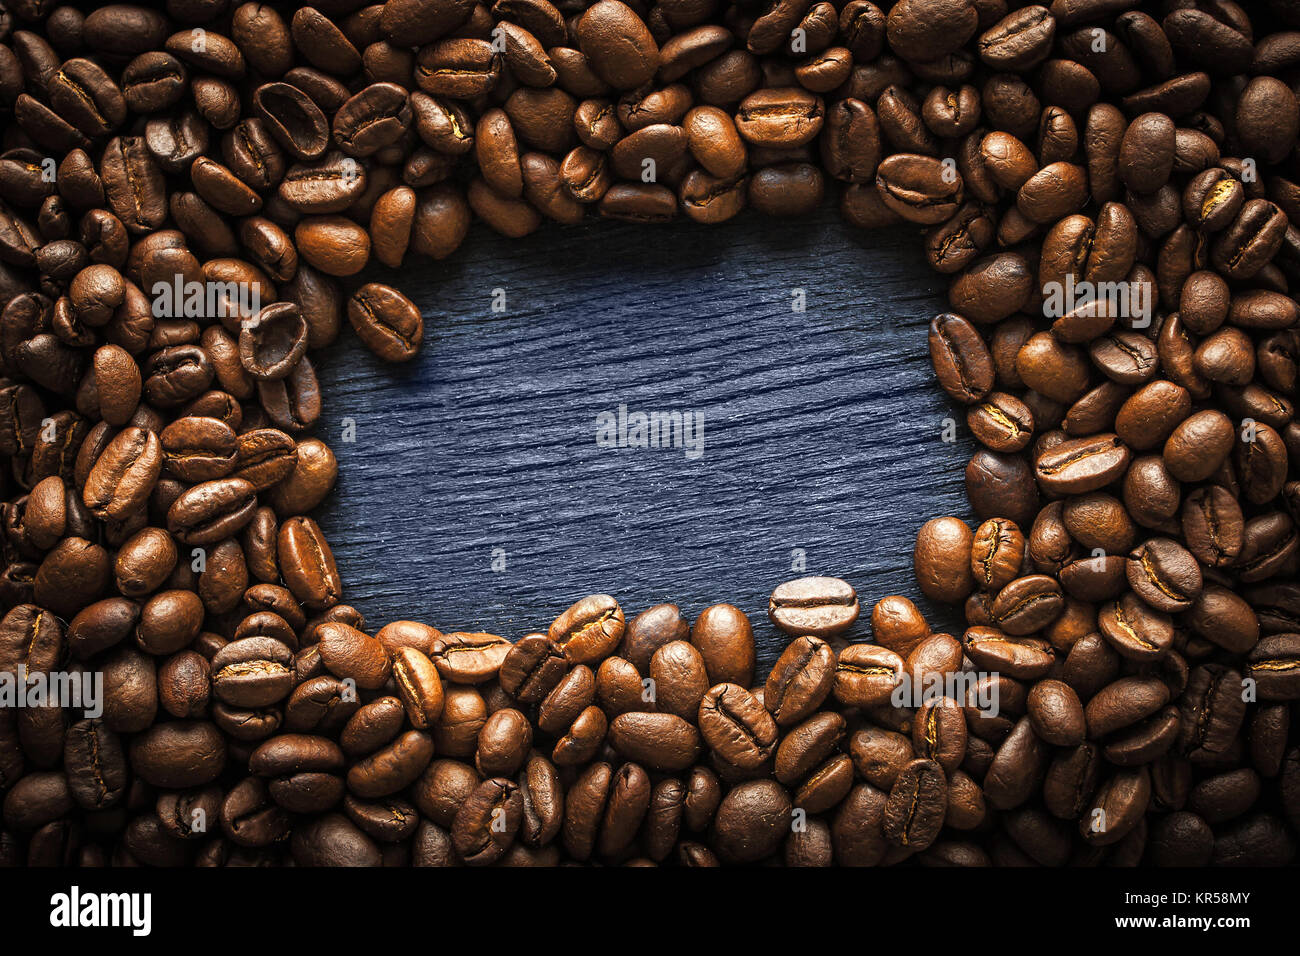 Coffee bean frame on the dark background horizontal Stock Photo